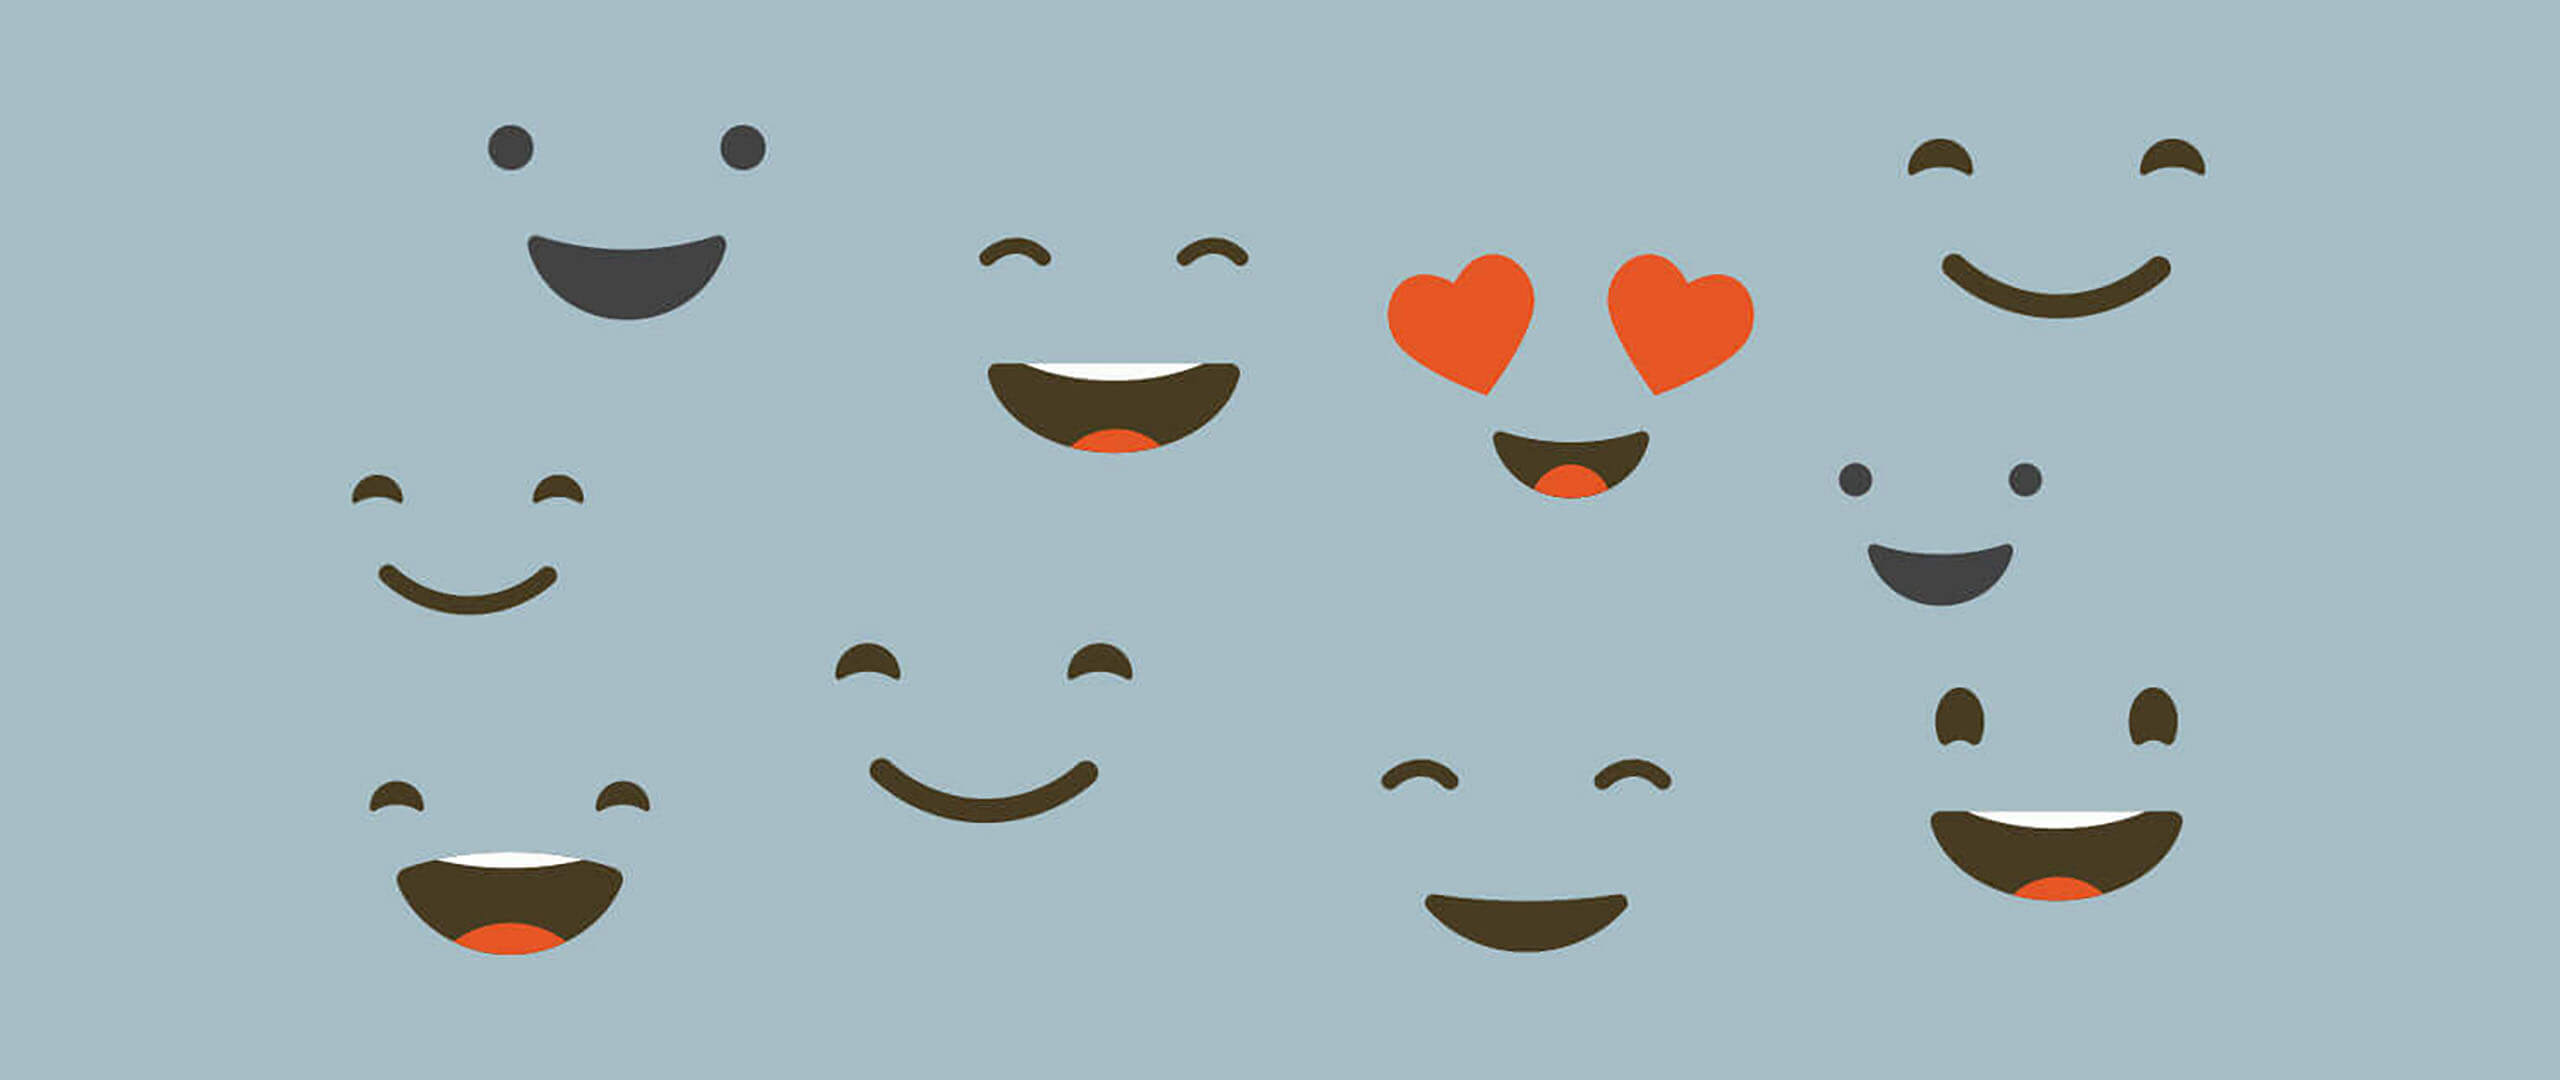 Captivate Users Through Emotional Web Design